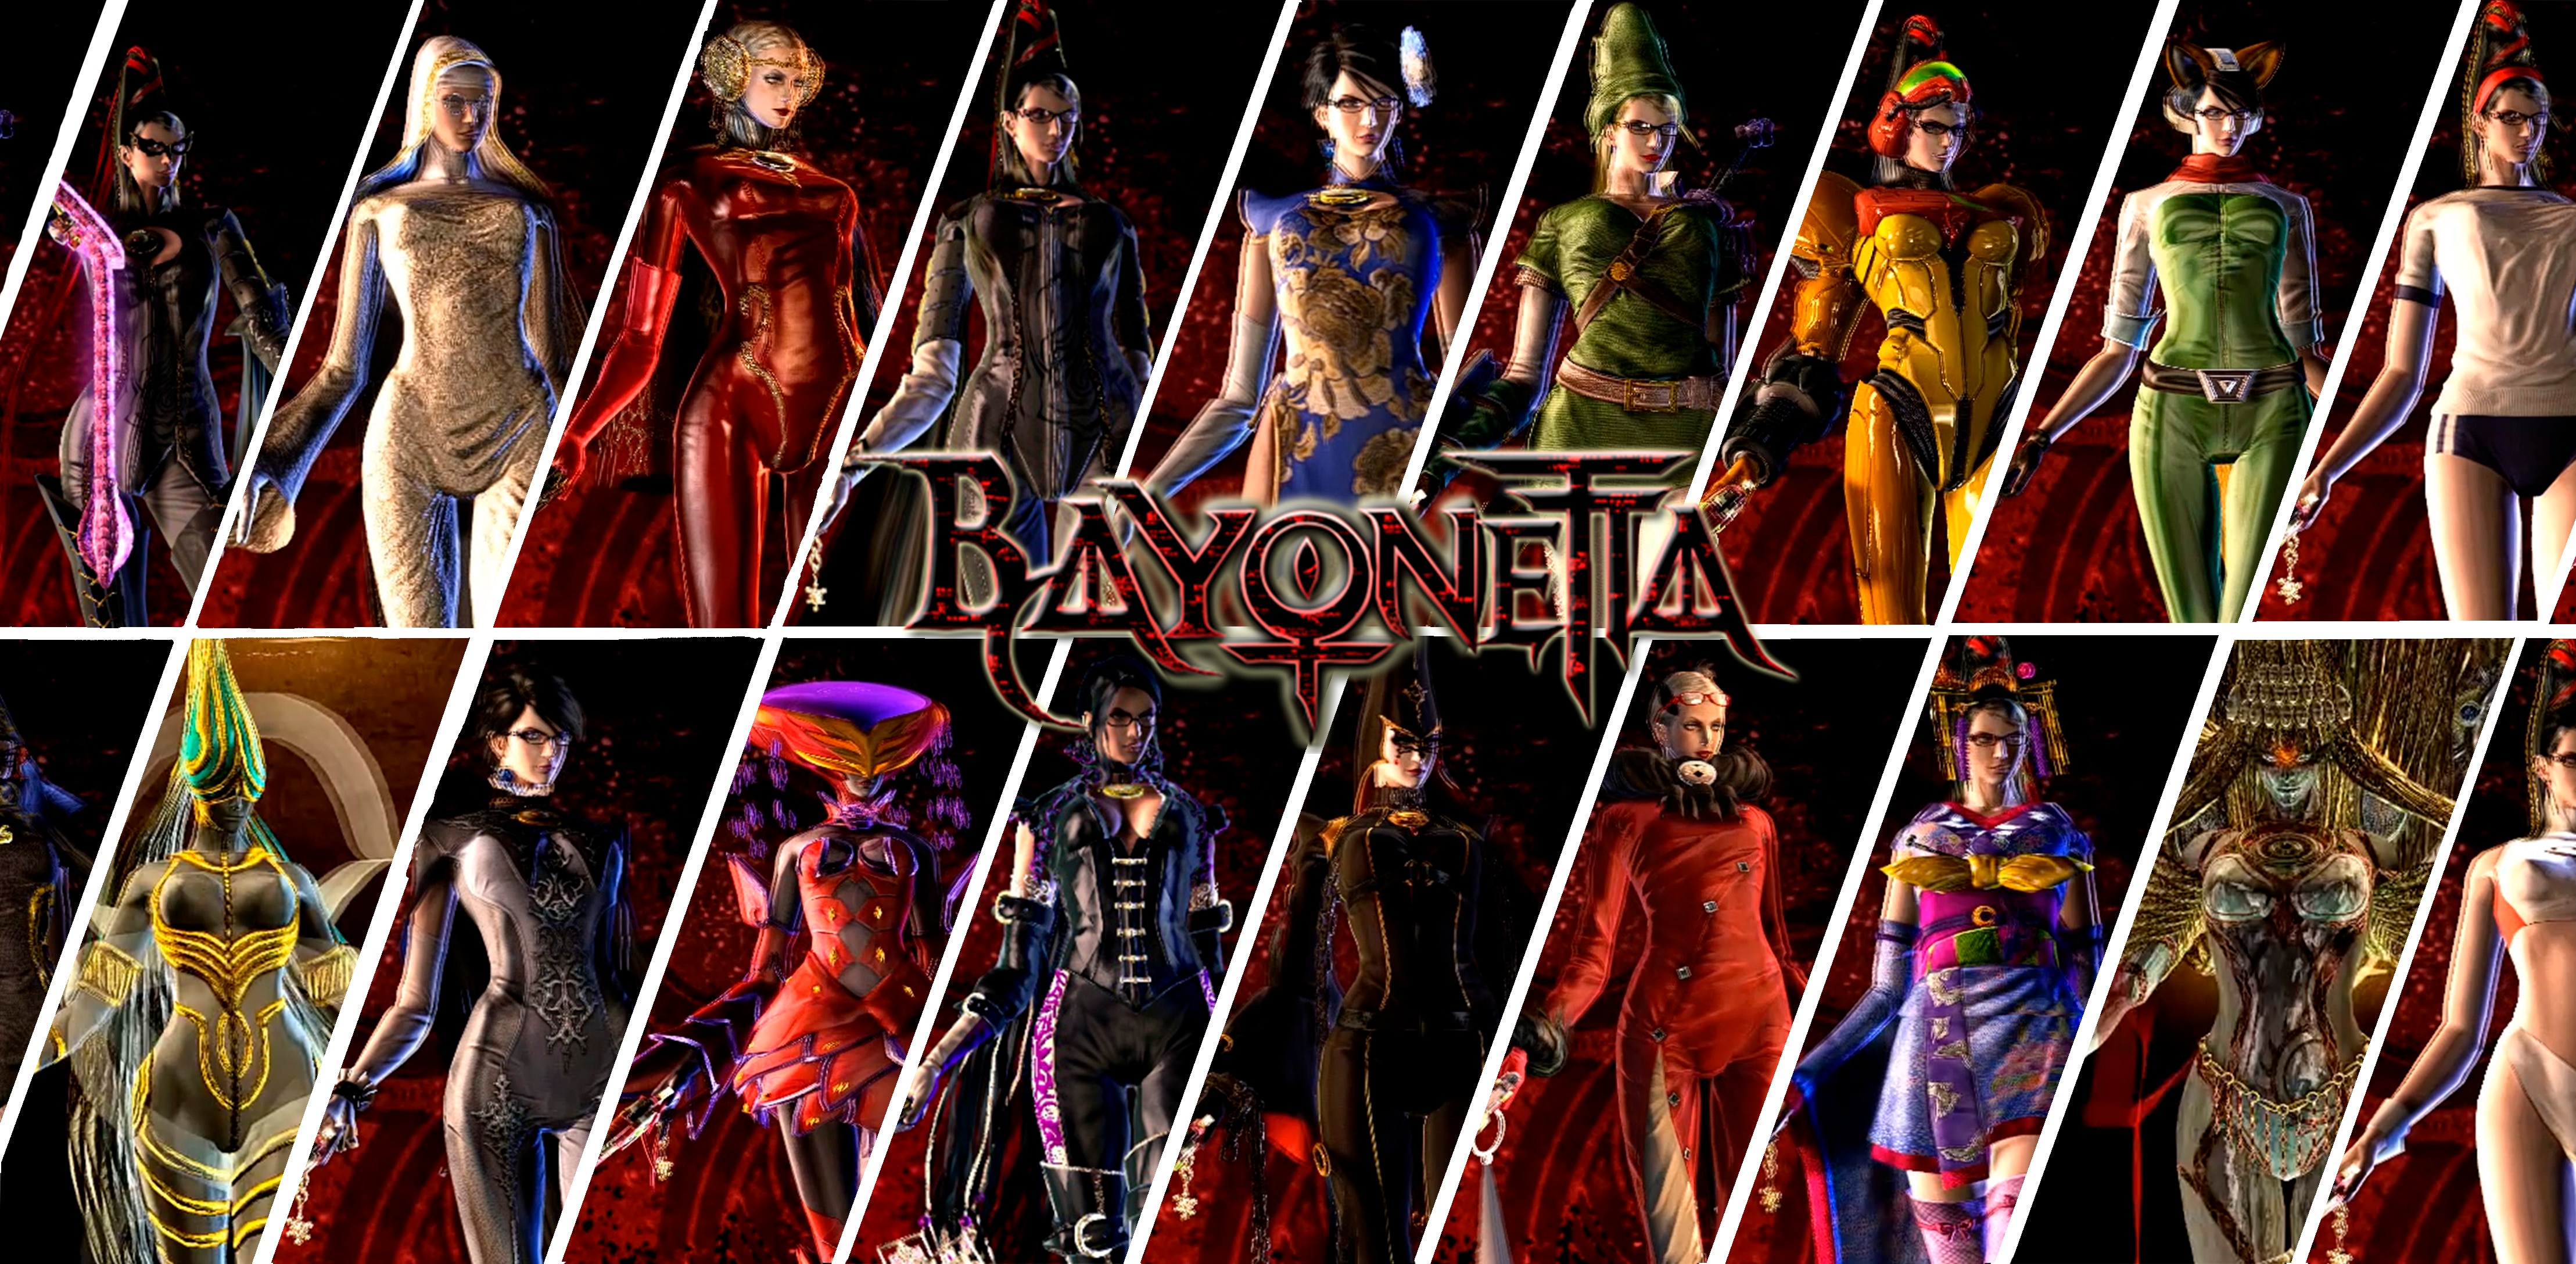 Bayonetta no Steam